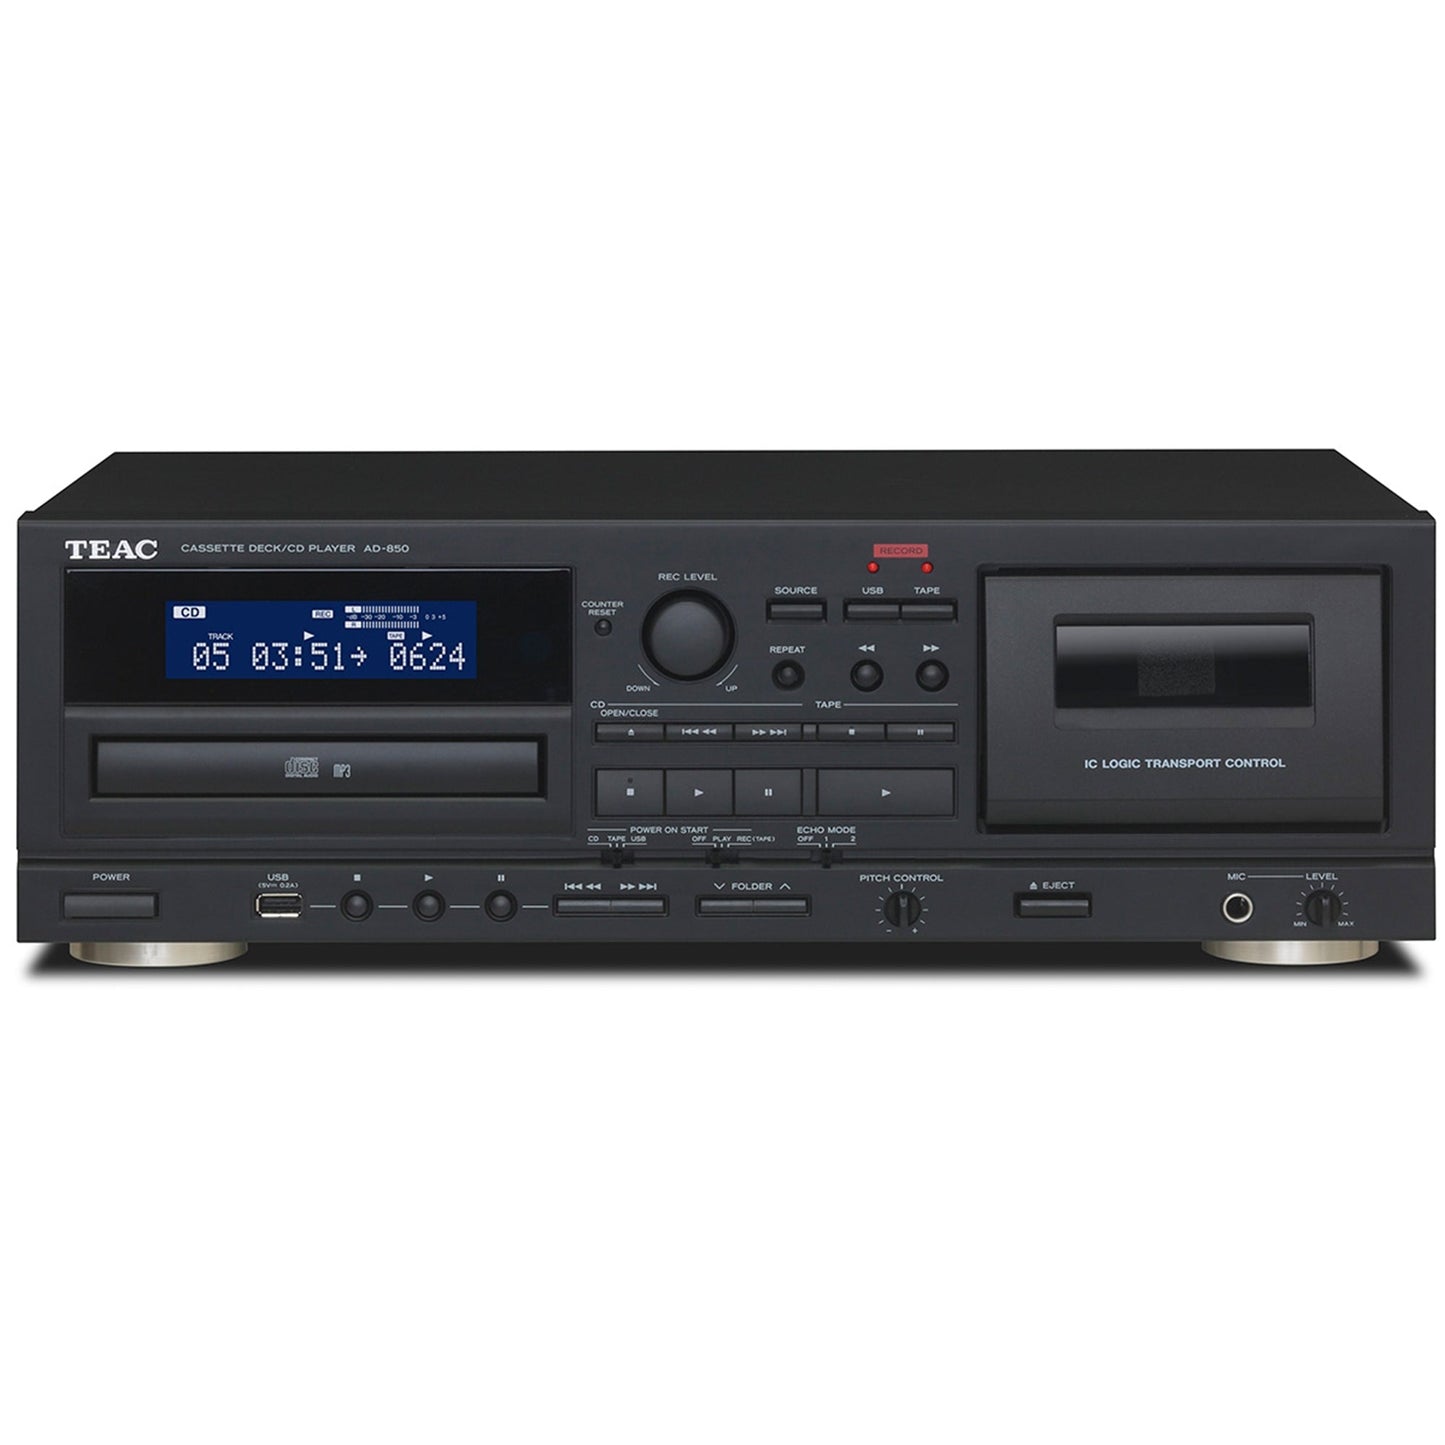 TEAC AD-850-SE Cassette Deck CD Player